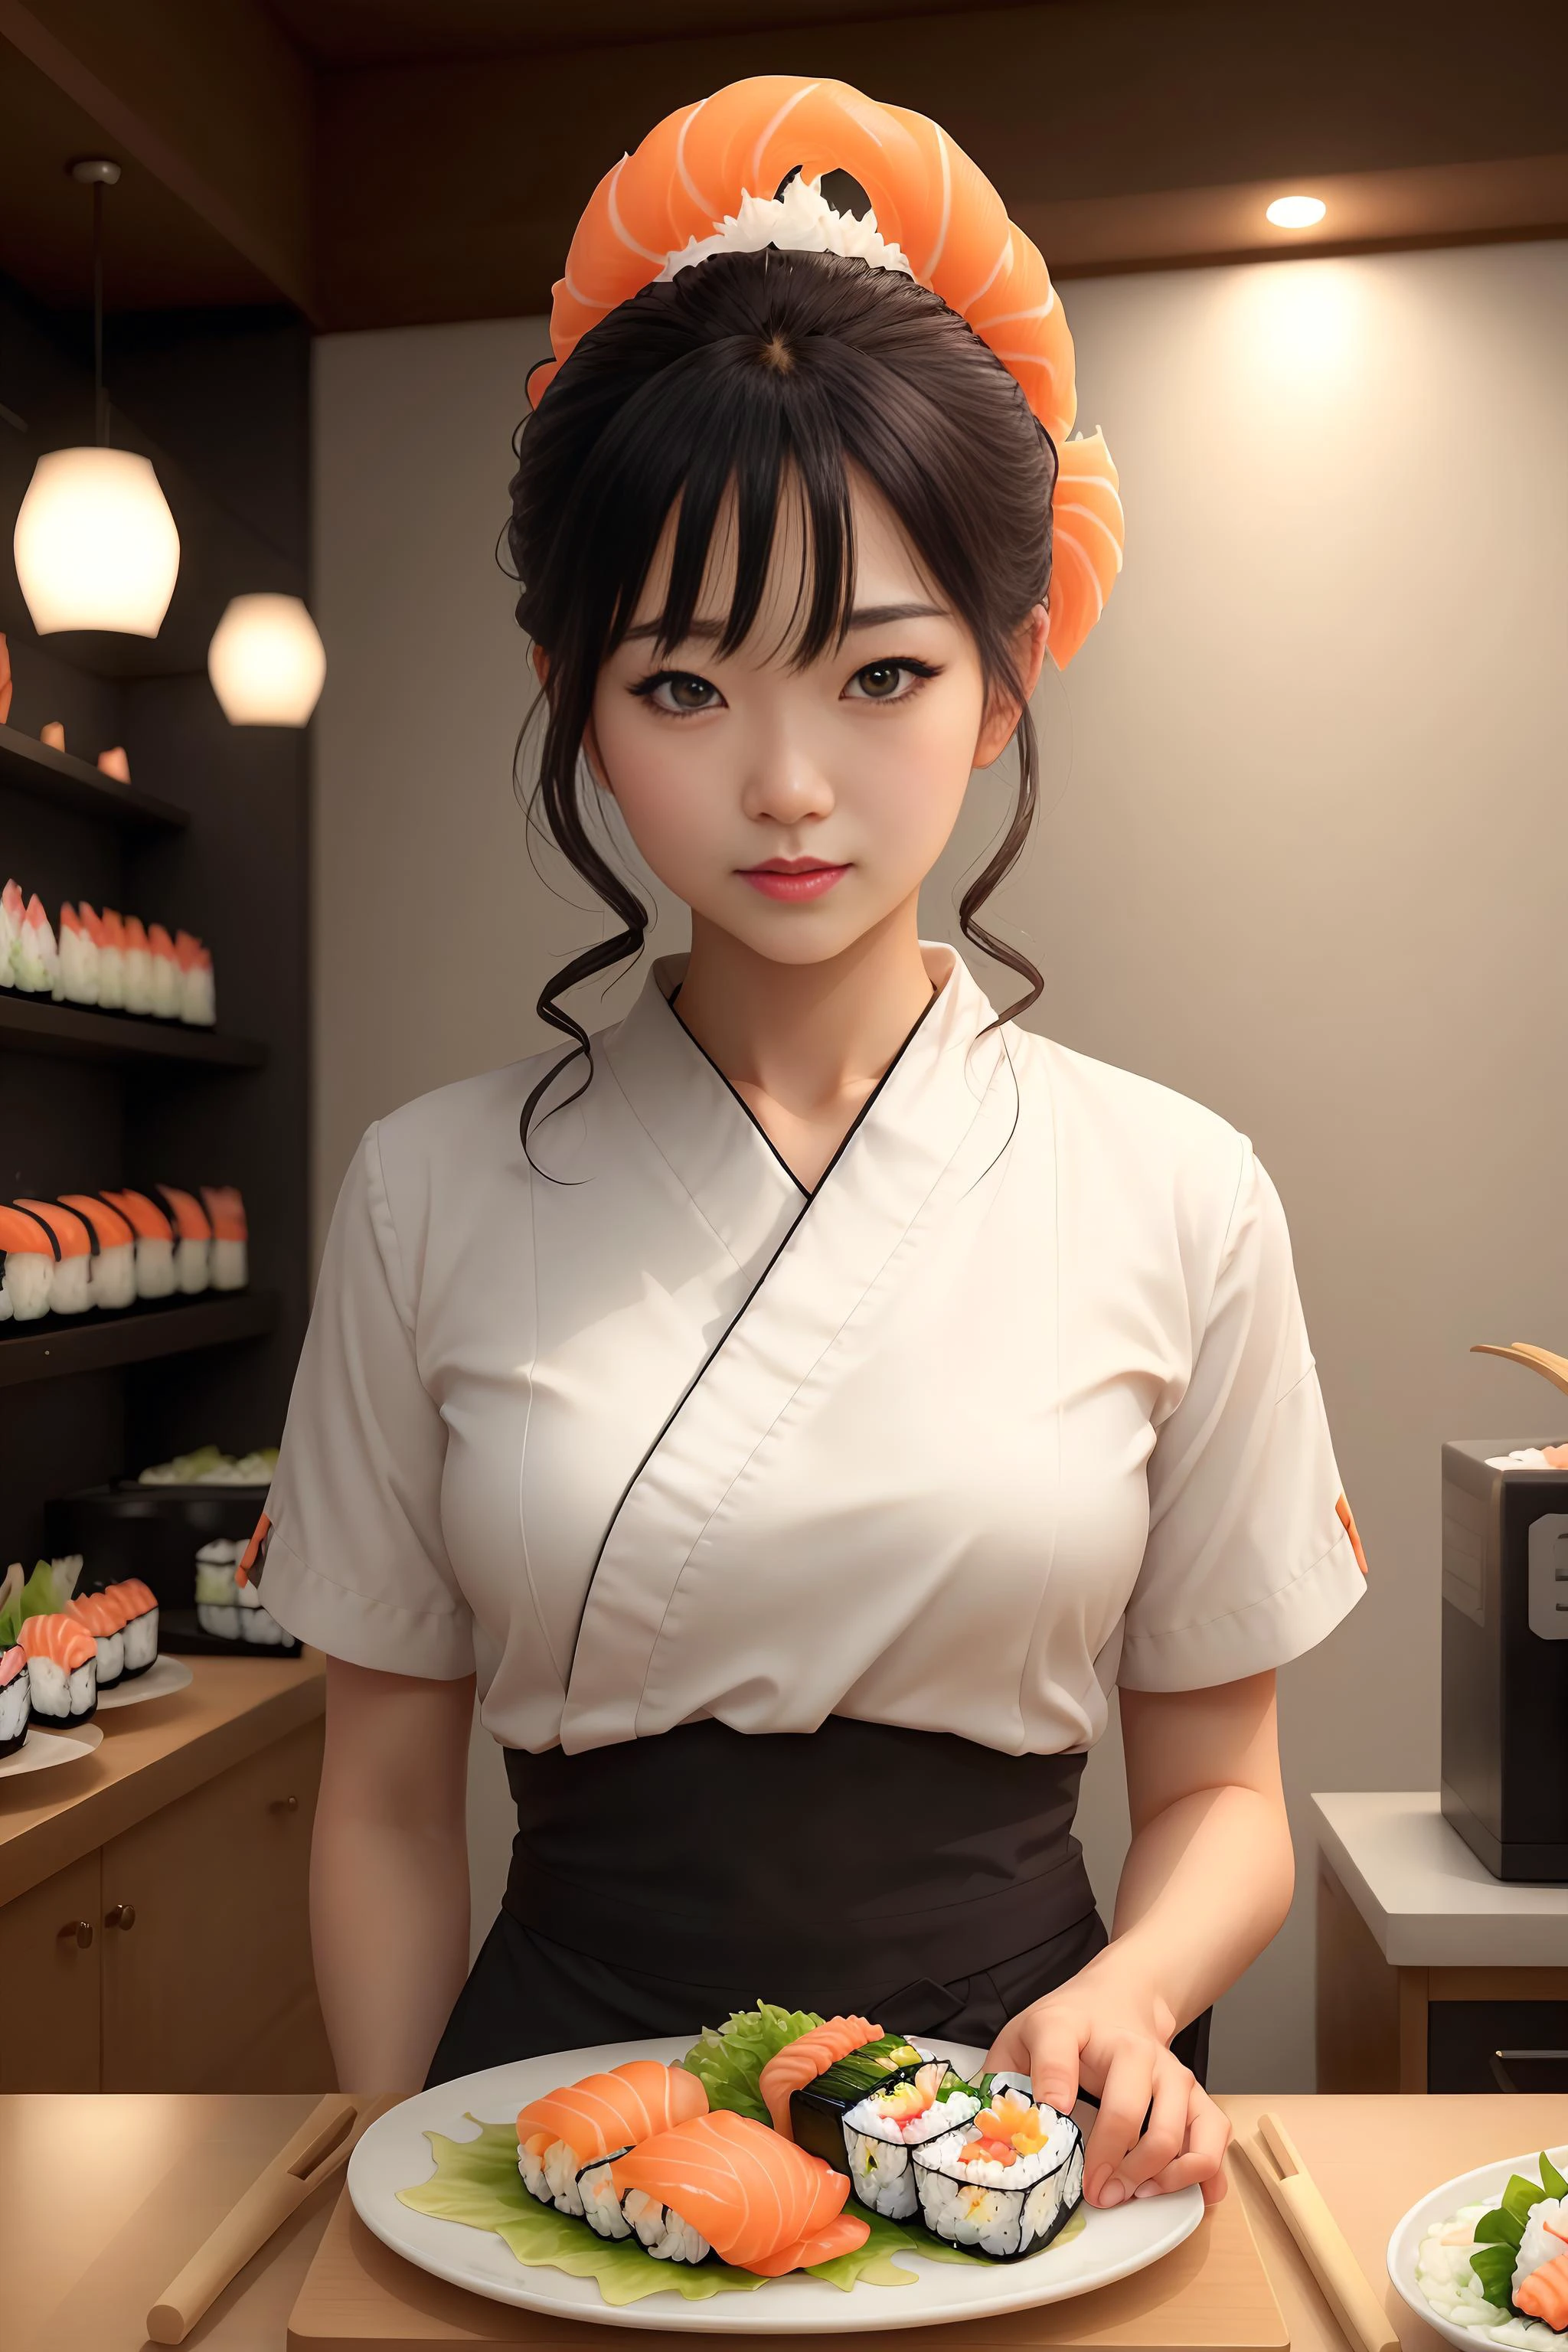 SushiStyle woman with WhippedCreamOnTopStyle